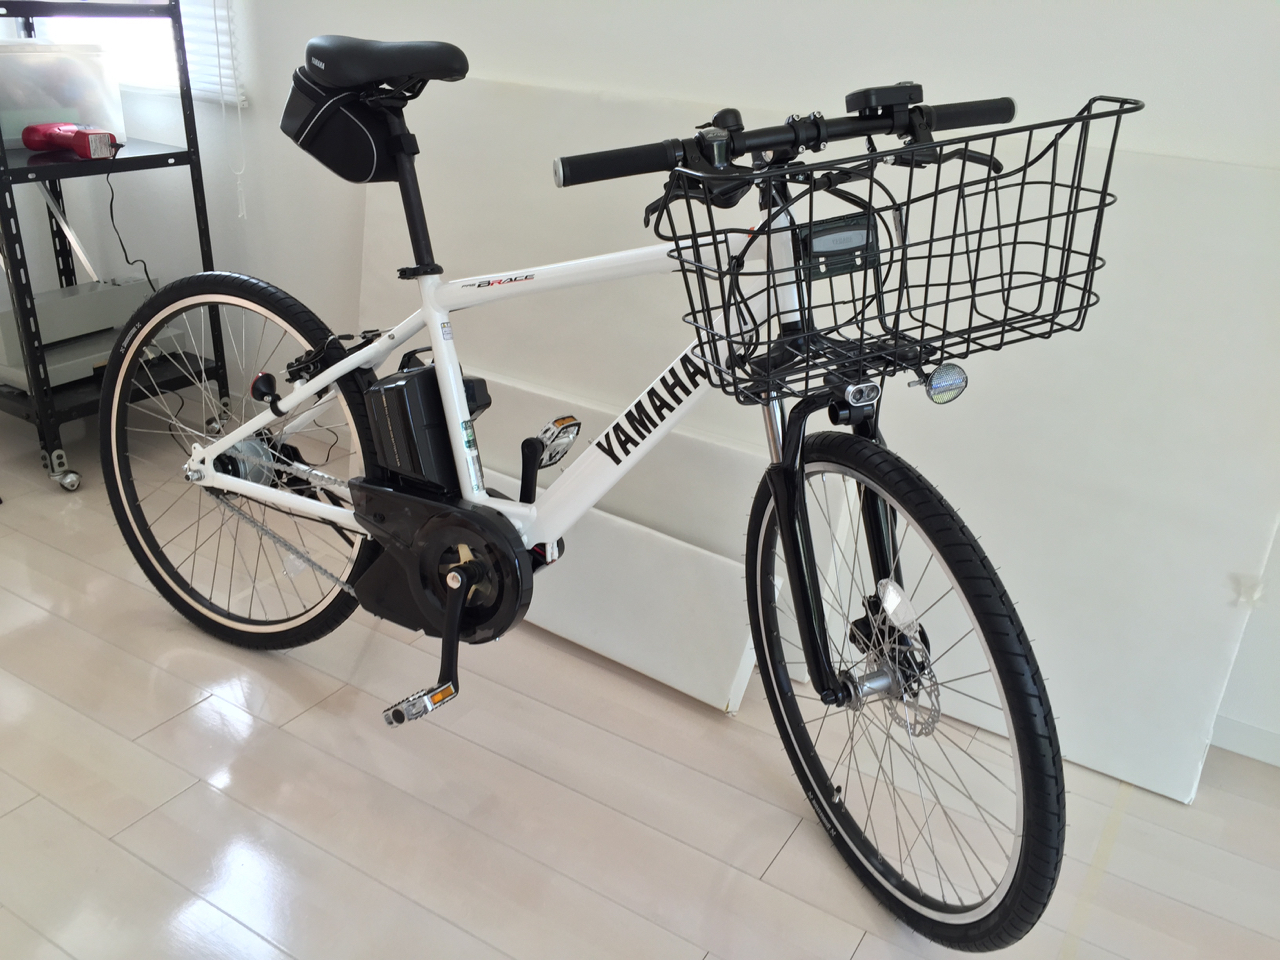 YAMAHA PAS Brace XL — スポーツモデルの電動アシスト自転車が届いた 